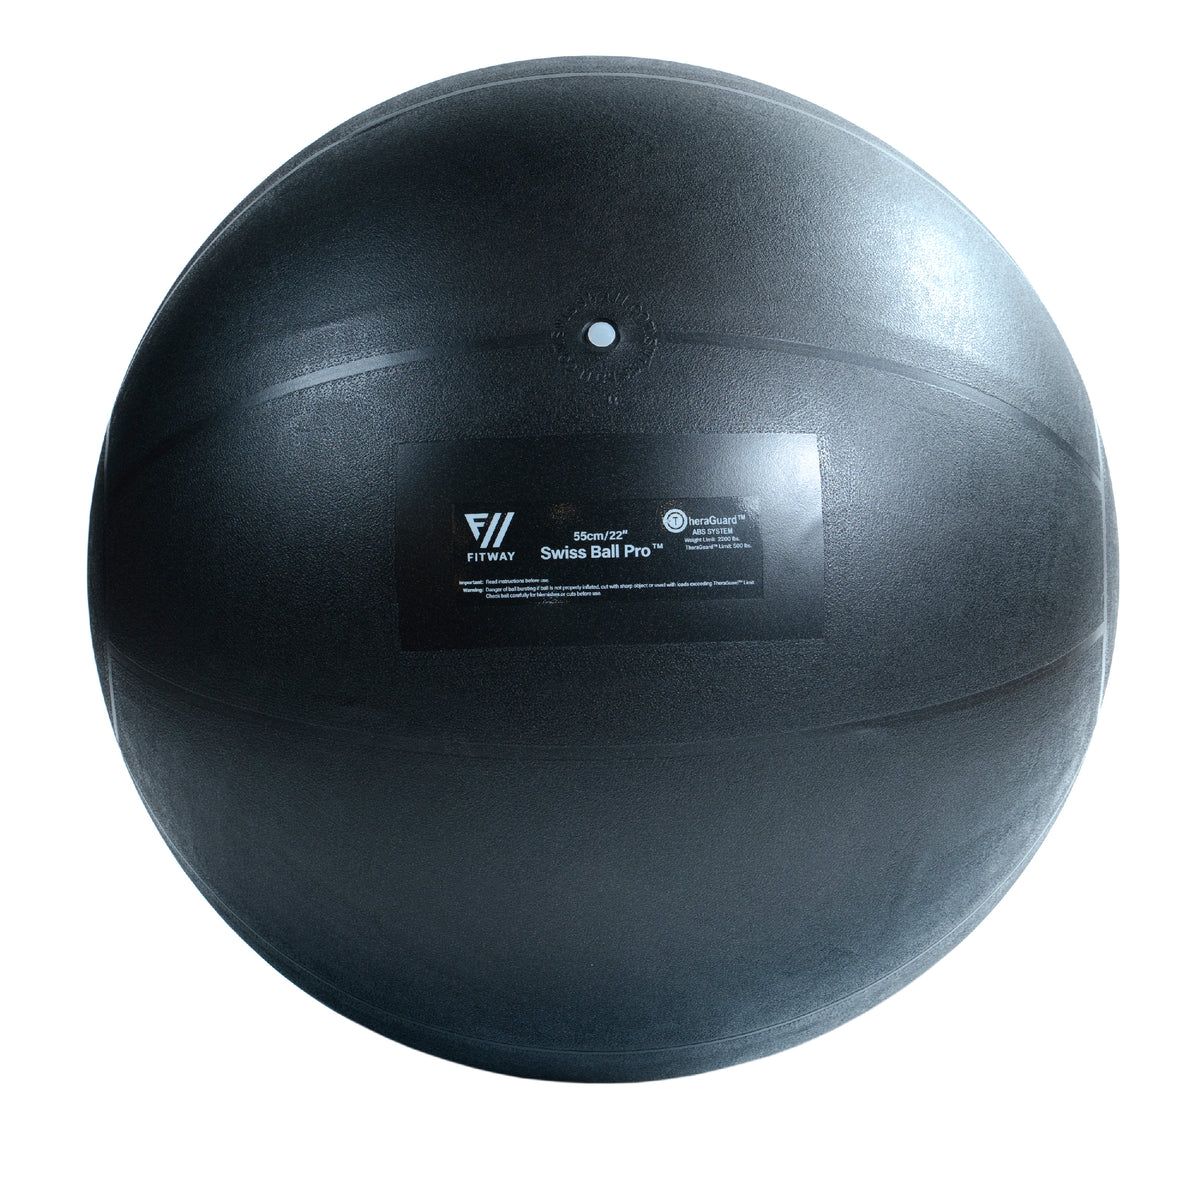 55cm Stability Ball